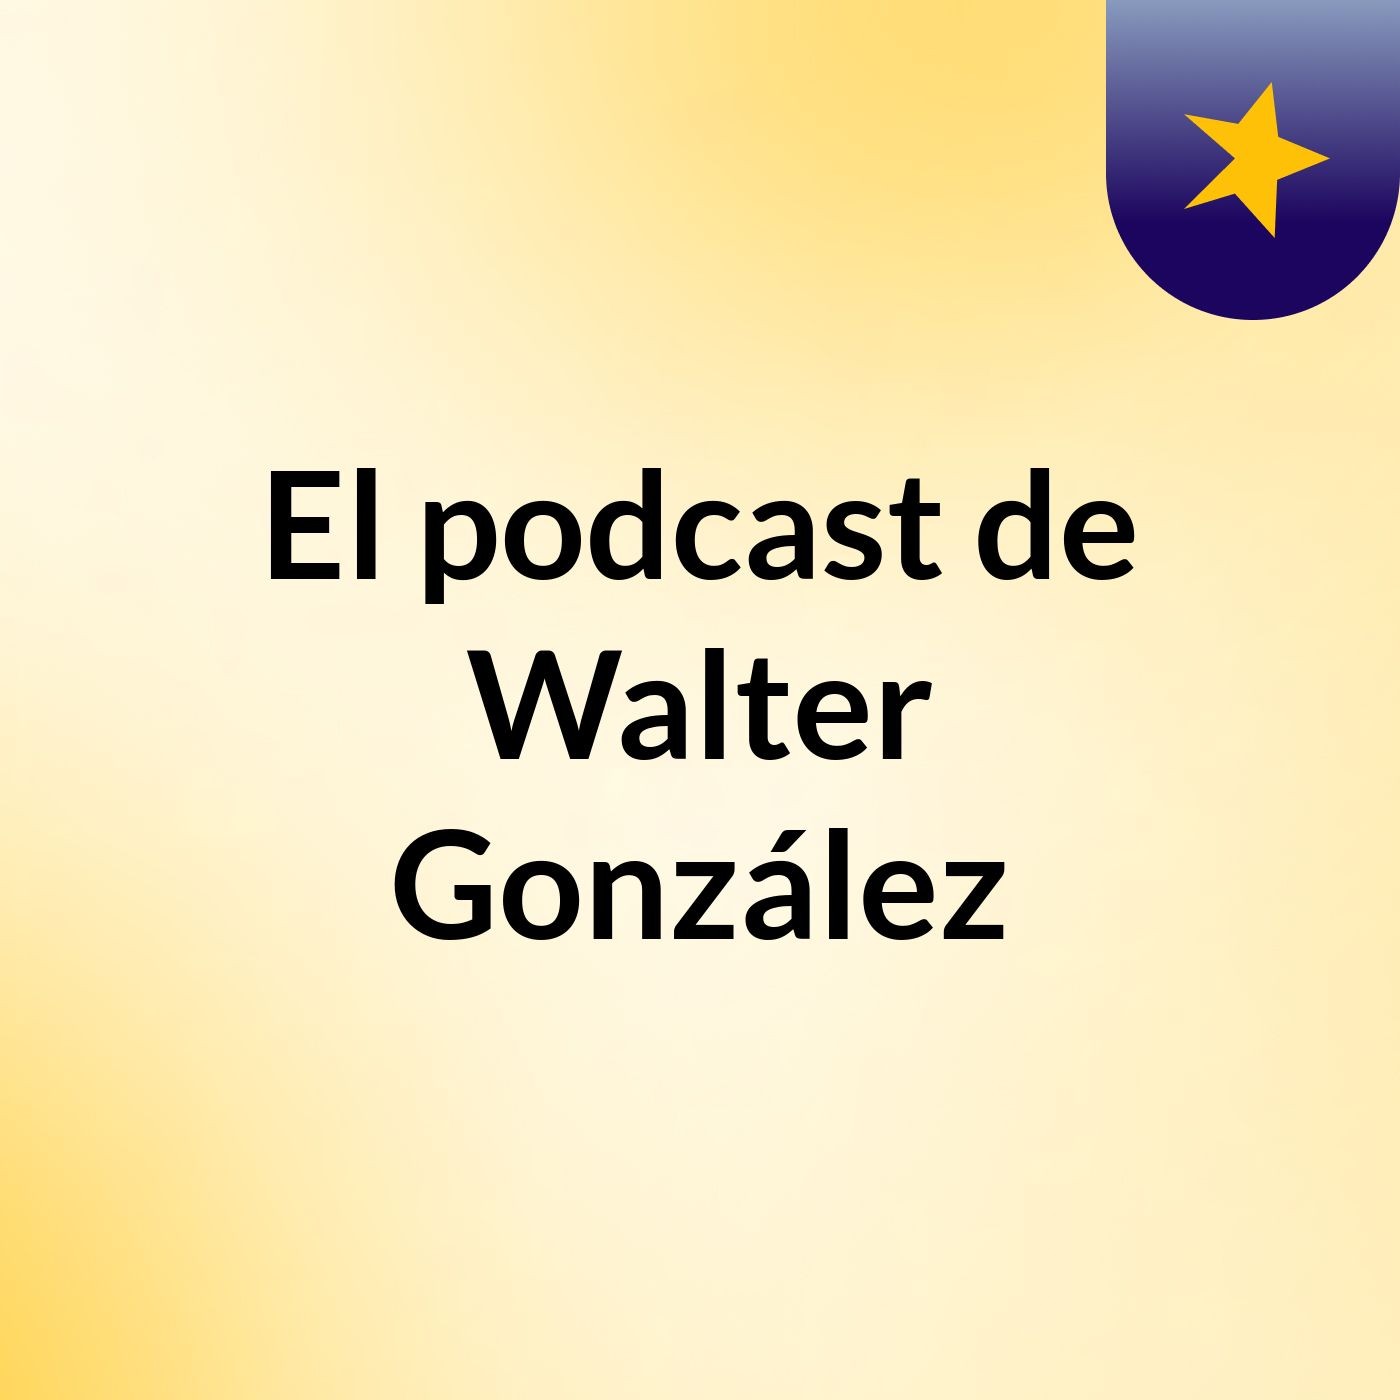 El podcast de Walter González